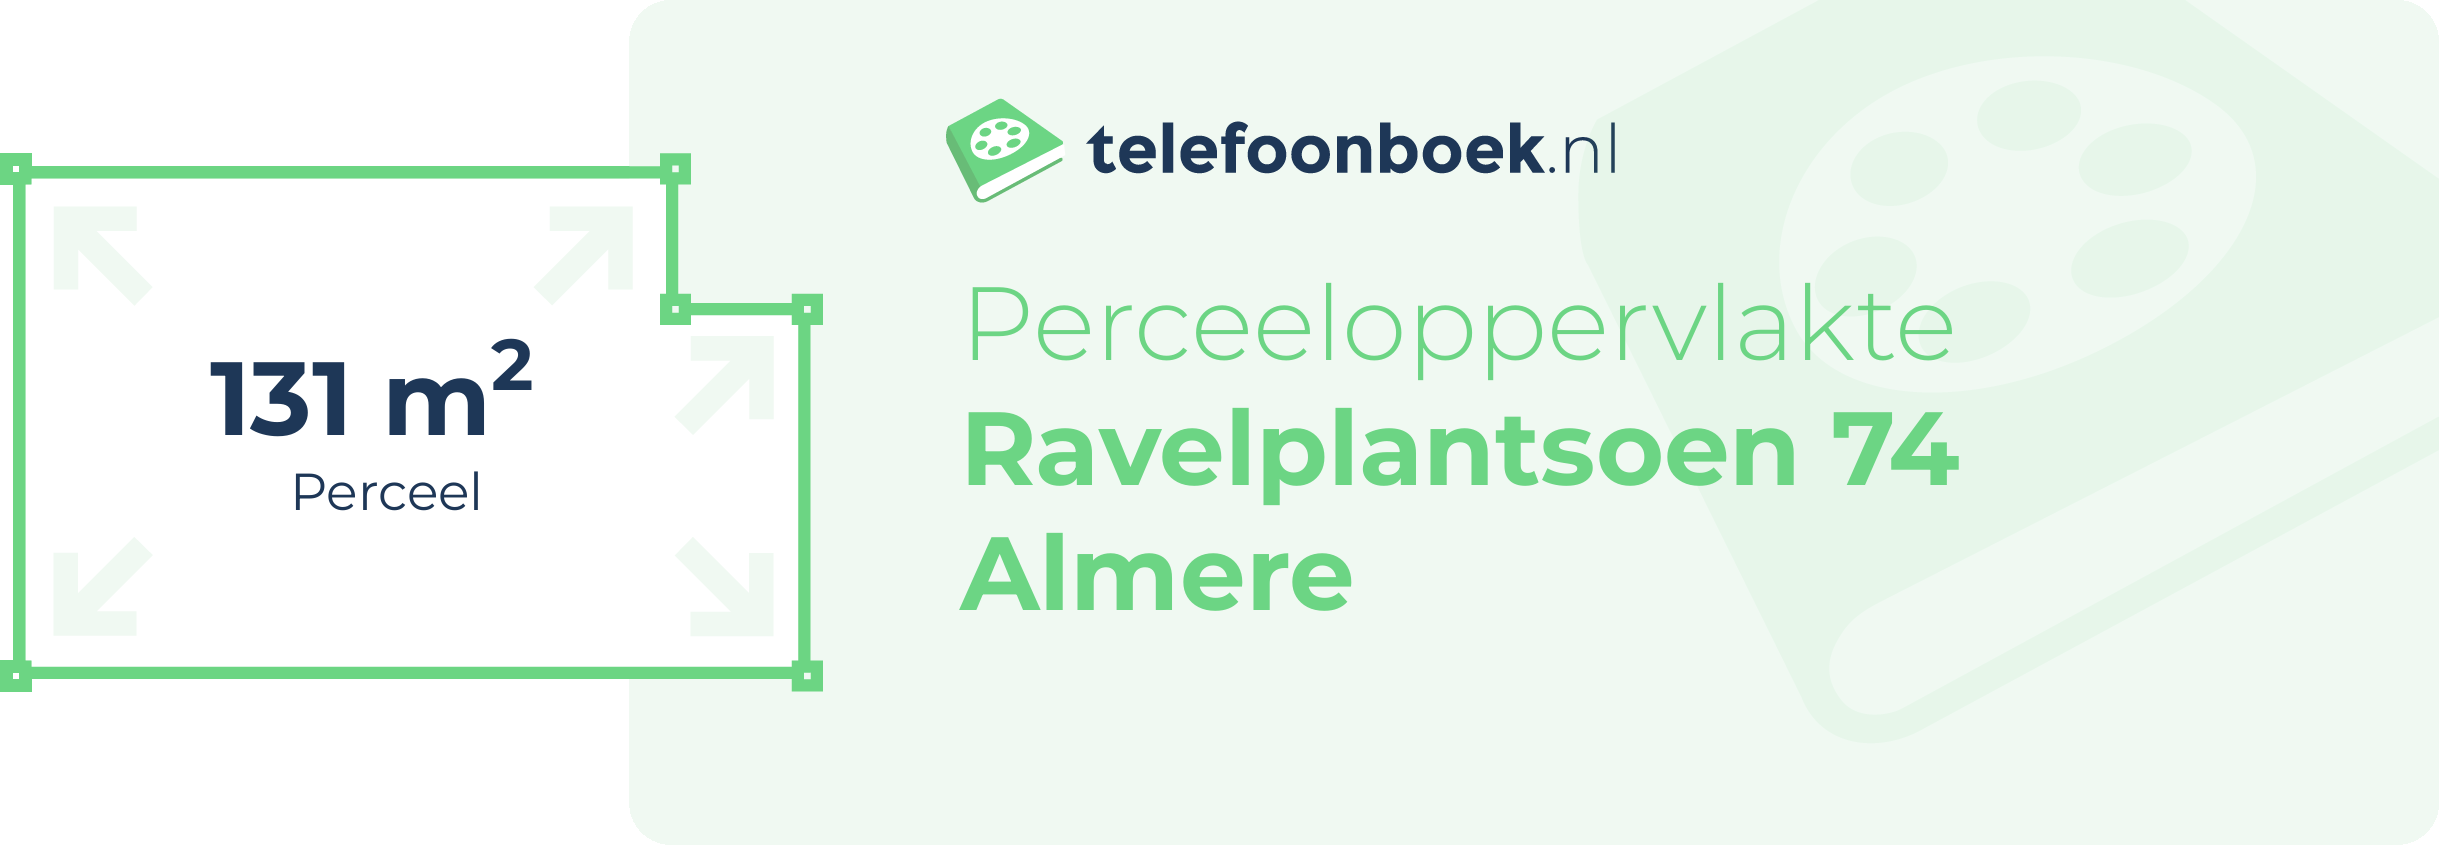 Perceeloppervlakte Ravelplantsoen 74 Almere